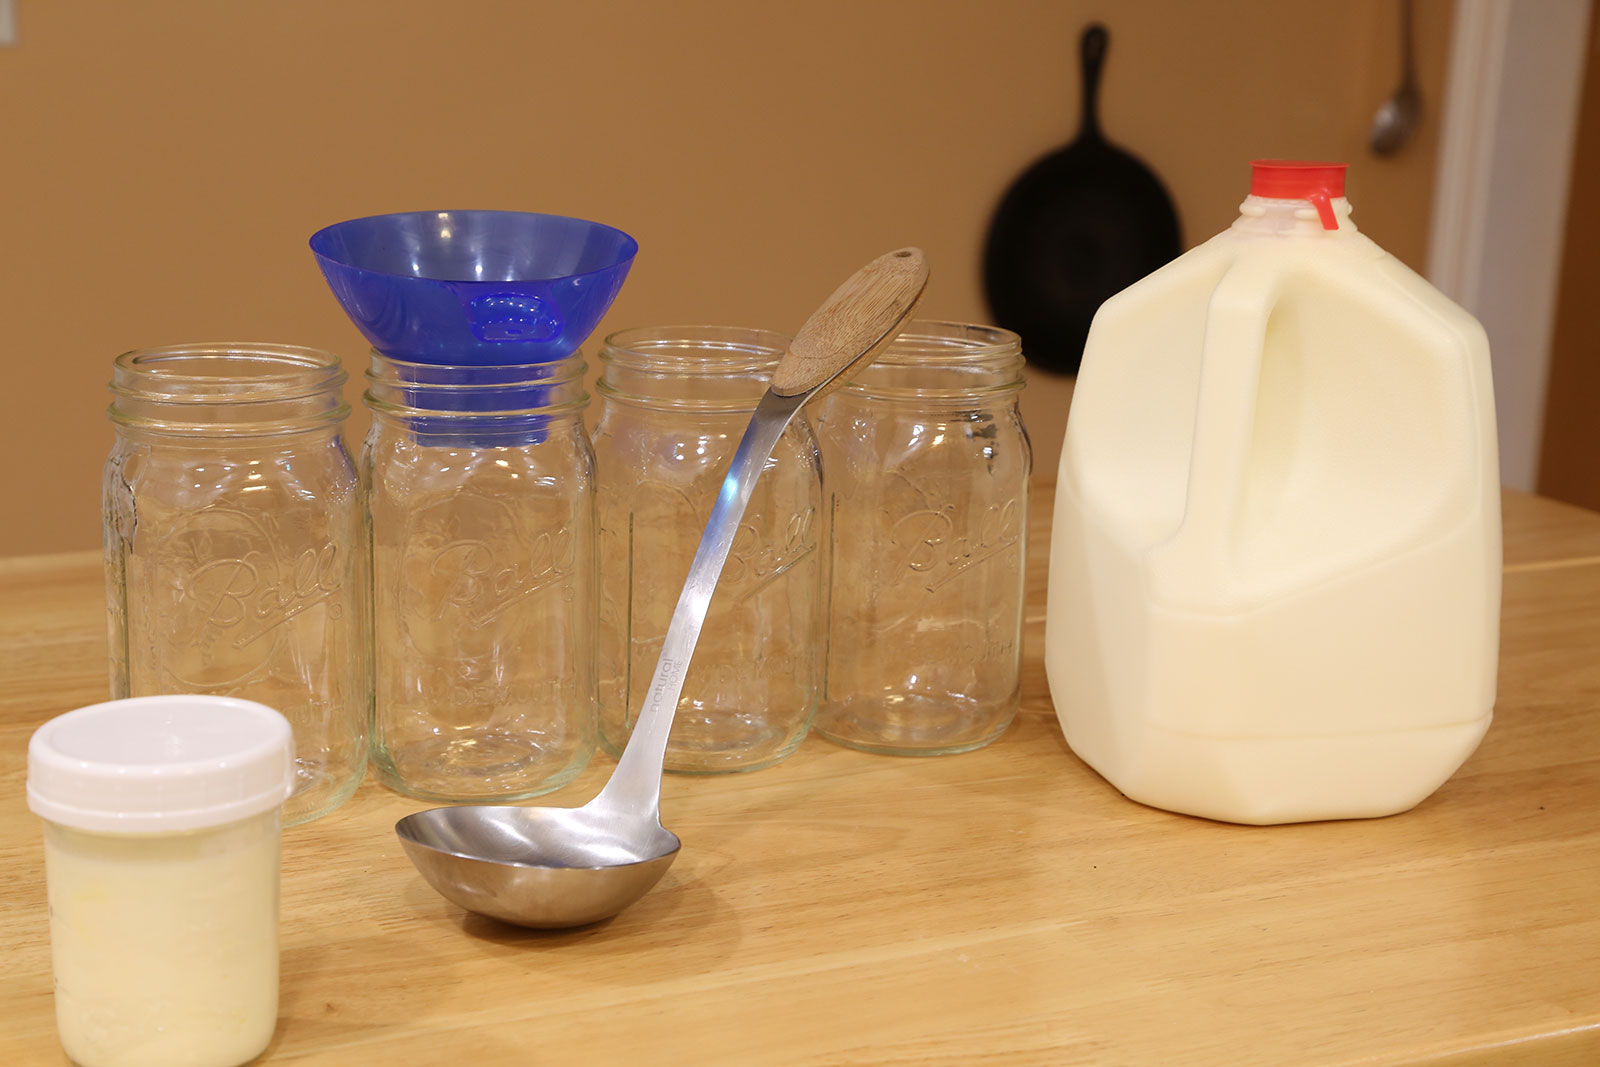 The basic supplies needed to make yogurt.